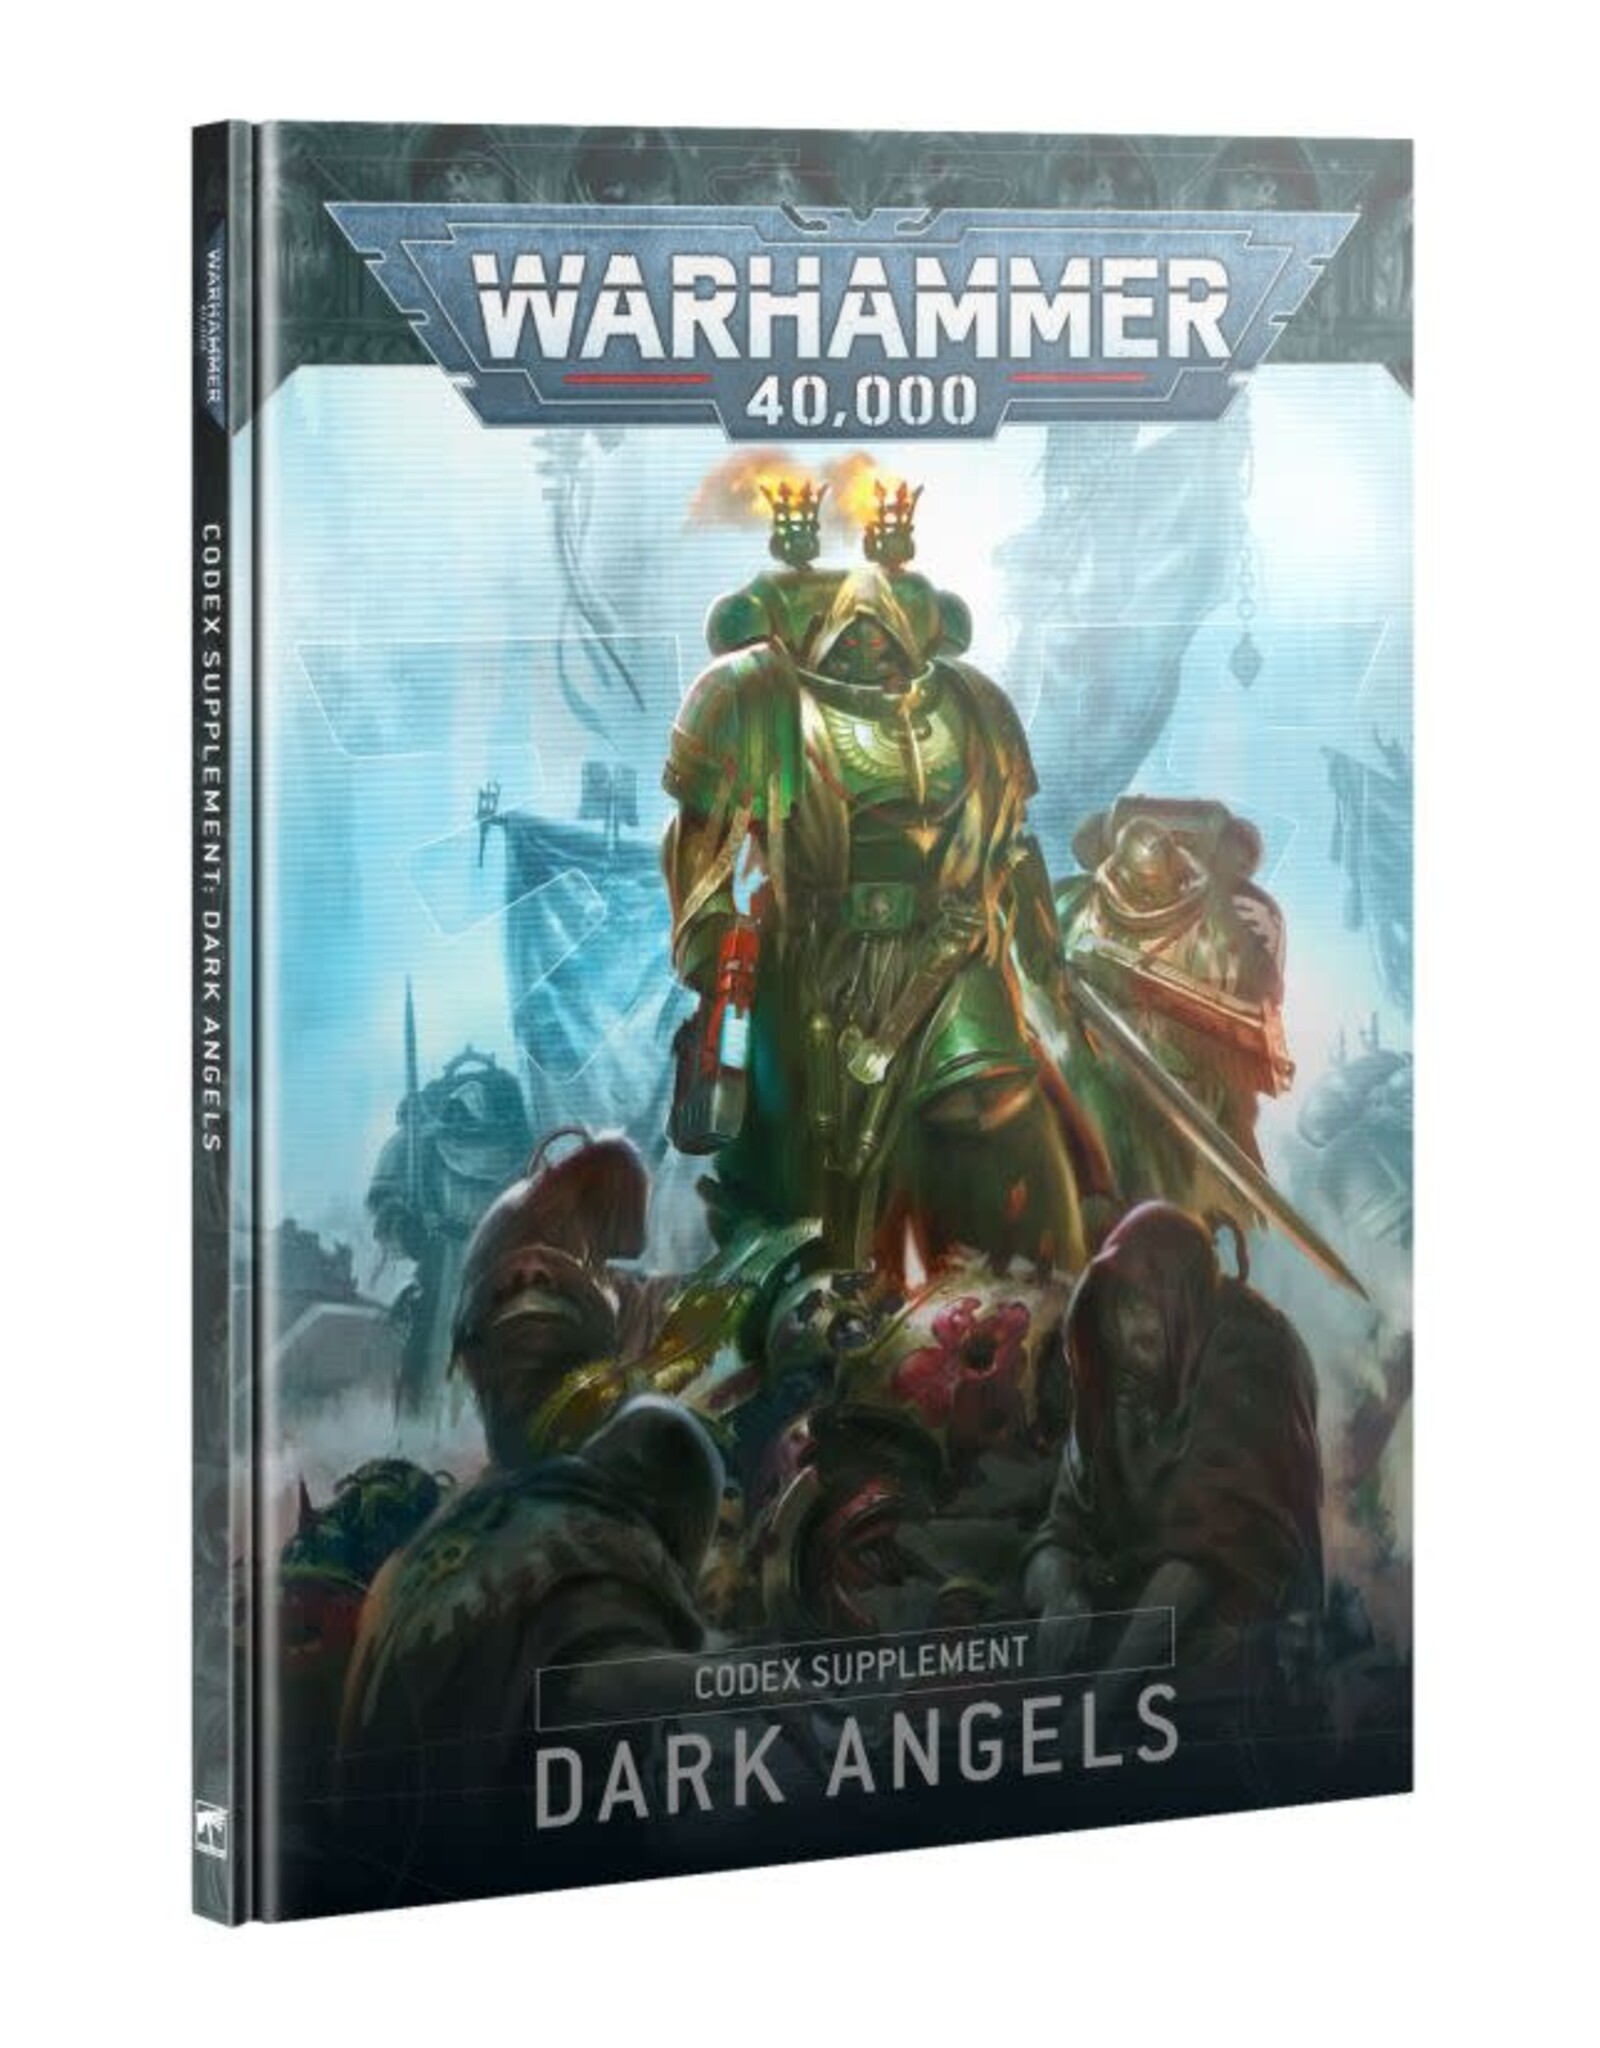 Warhammer 40k Codex: Dark Angels (10th Edition)